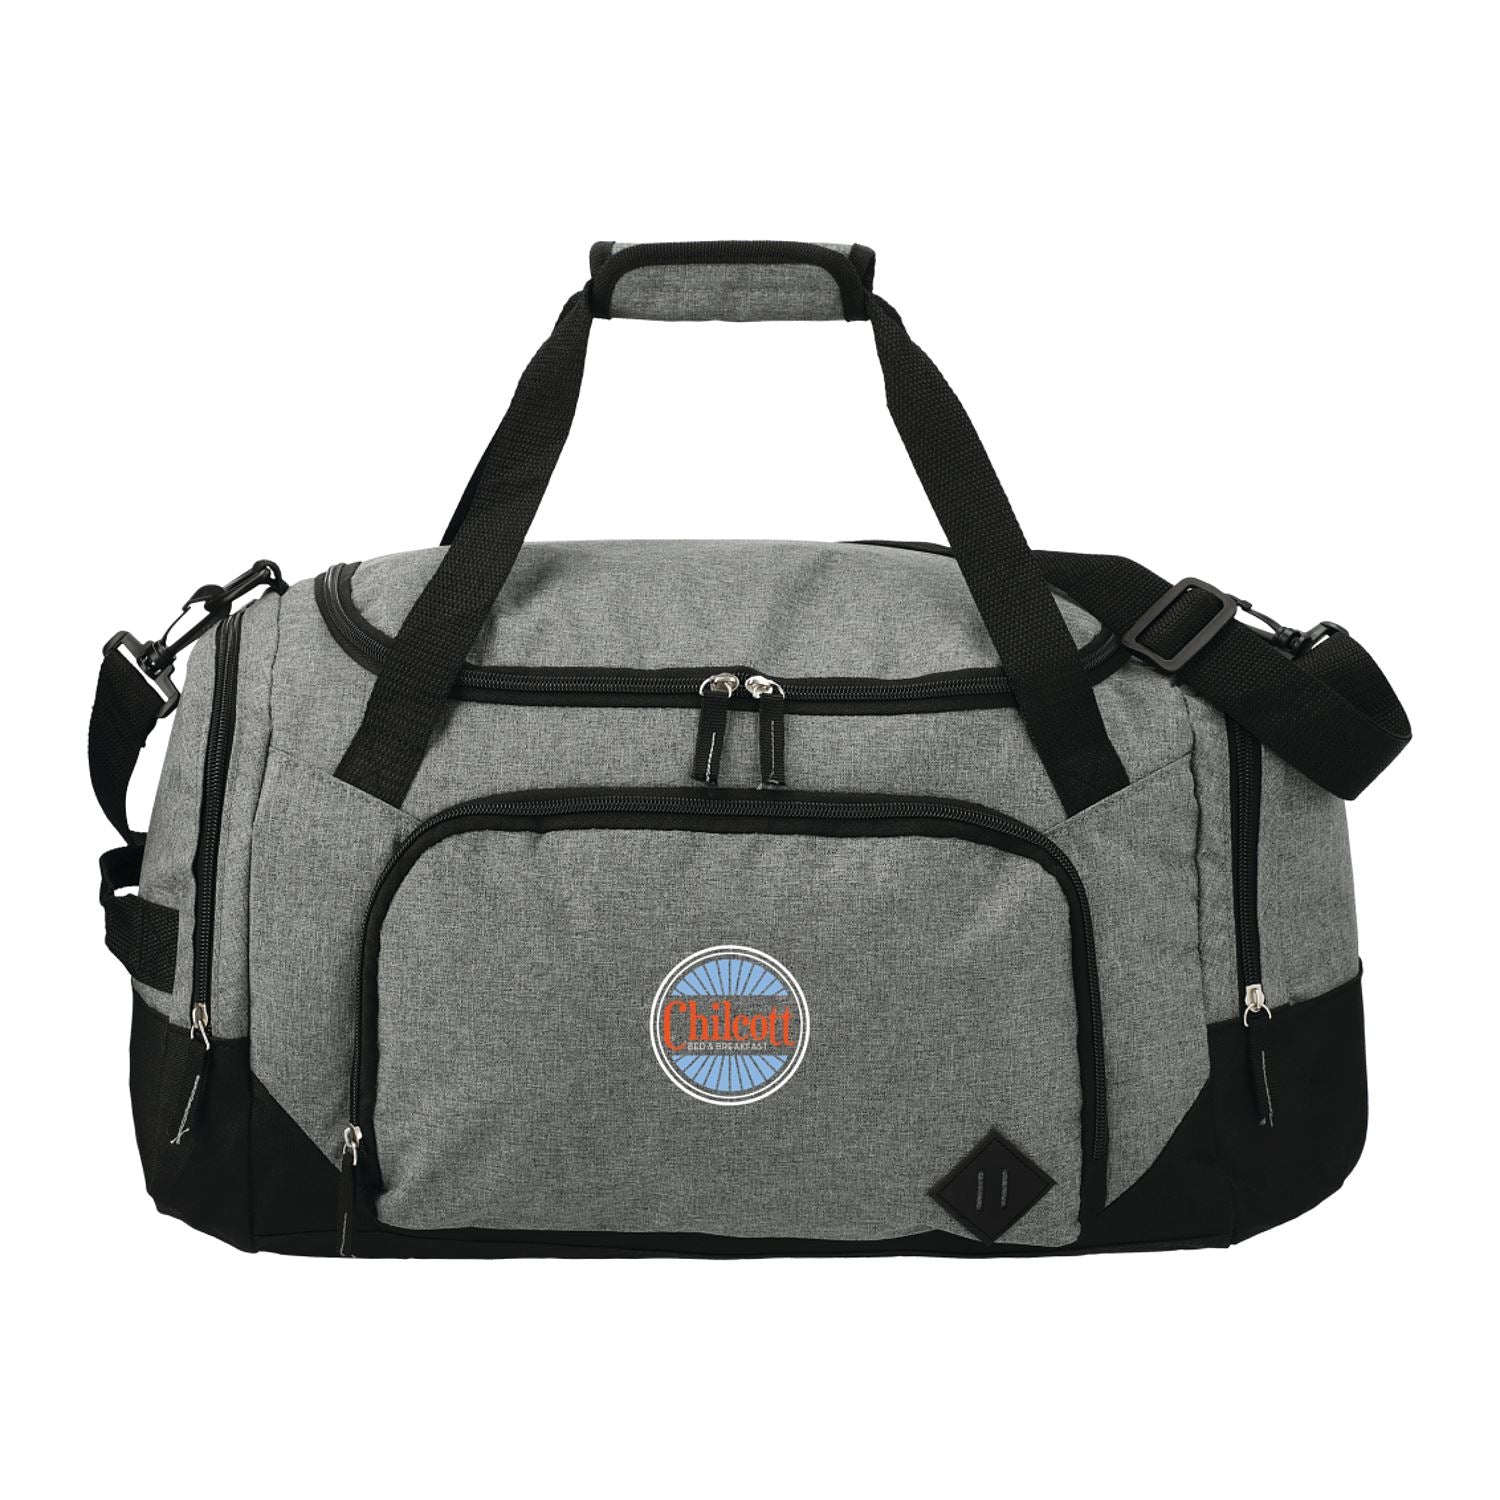 Graphite Weekender Duffel Bag Charcoal Single Color 